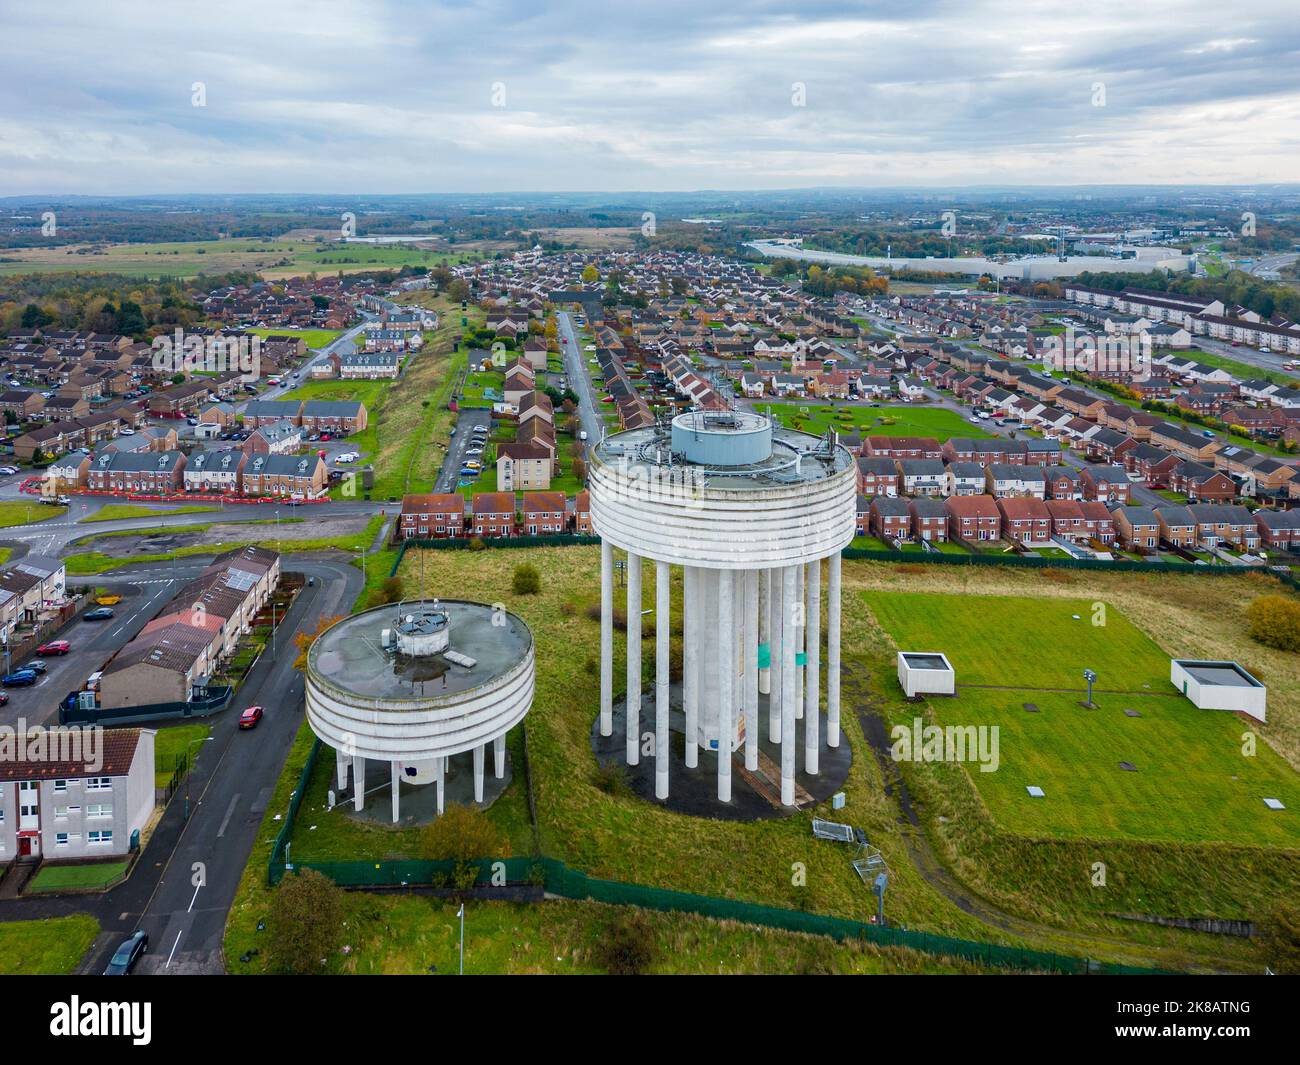 Aerial view of housing estate at Garthamlock in Glasgow, Scotland, UK Stock Photo